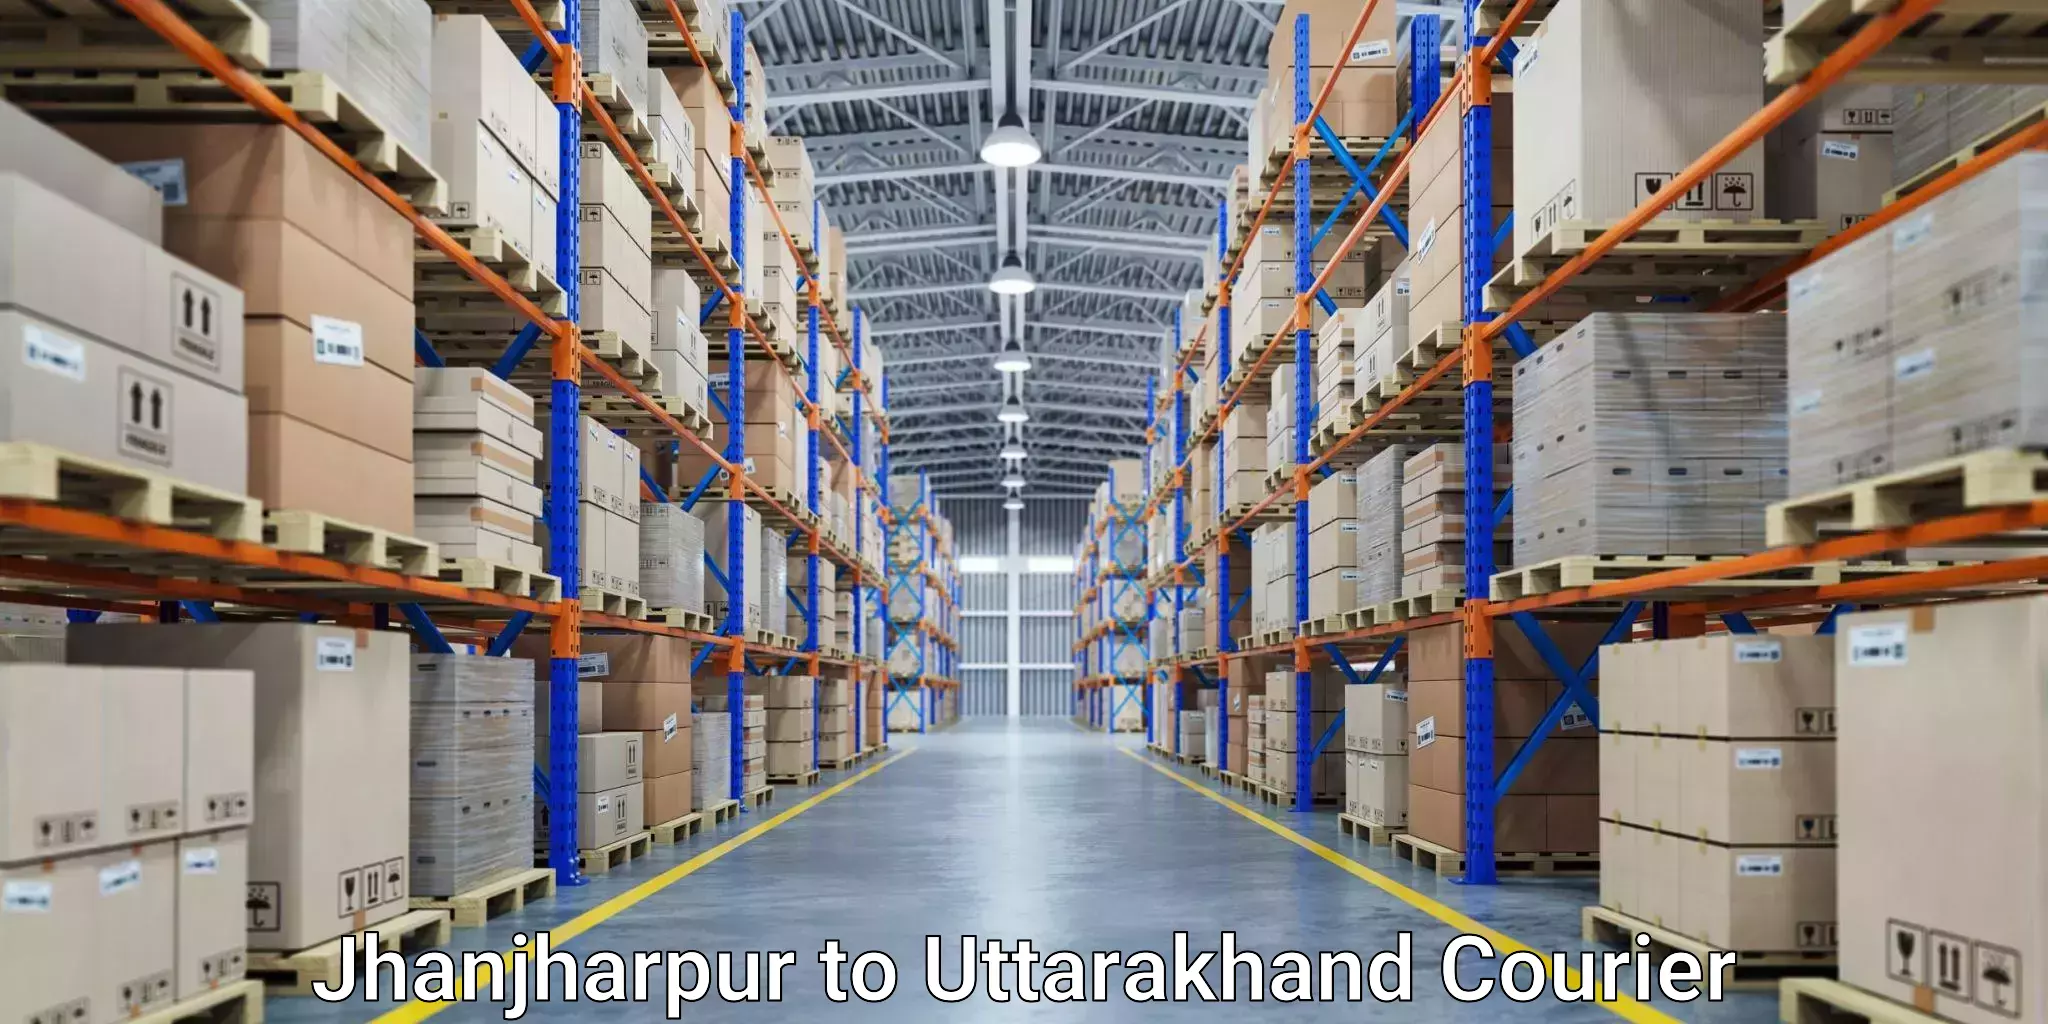 Courier service innovation Jhanjharpur to Uttarakhand